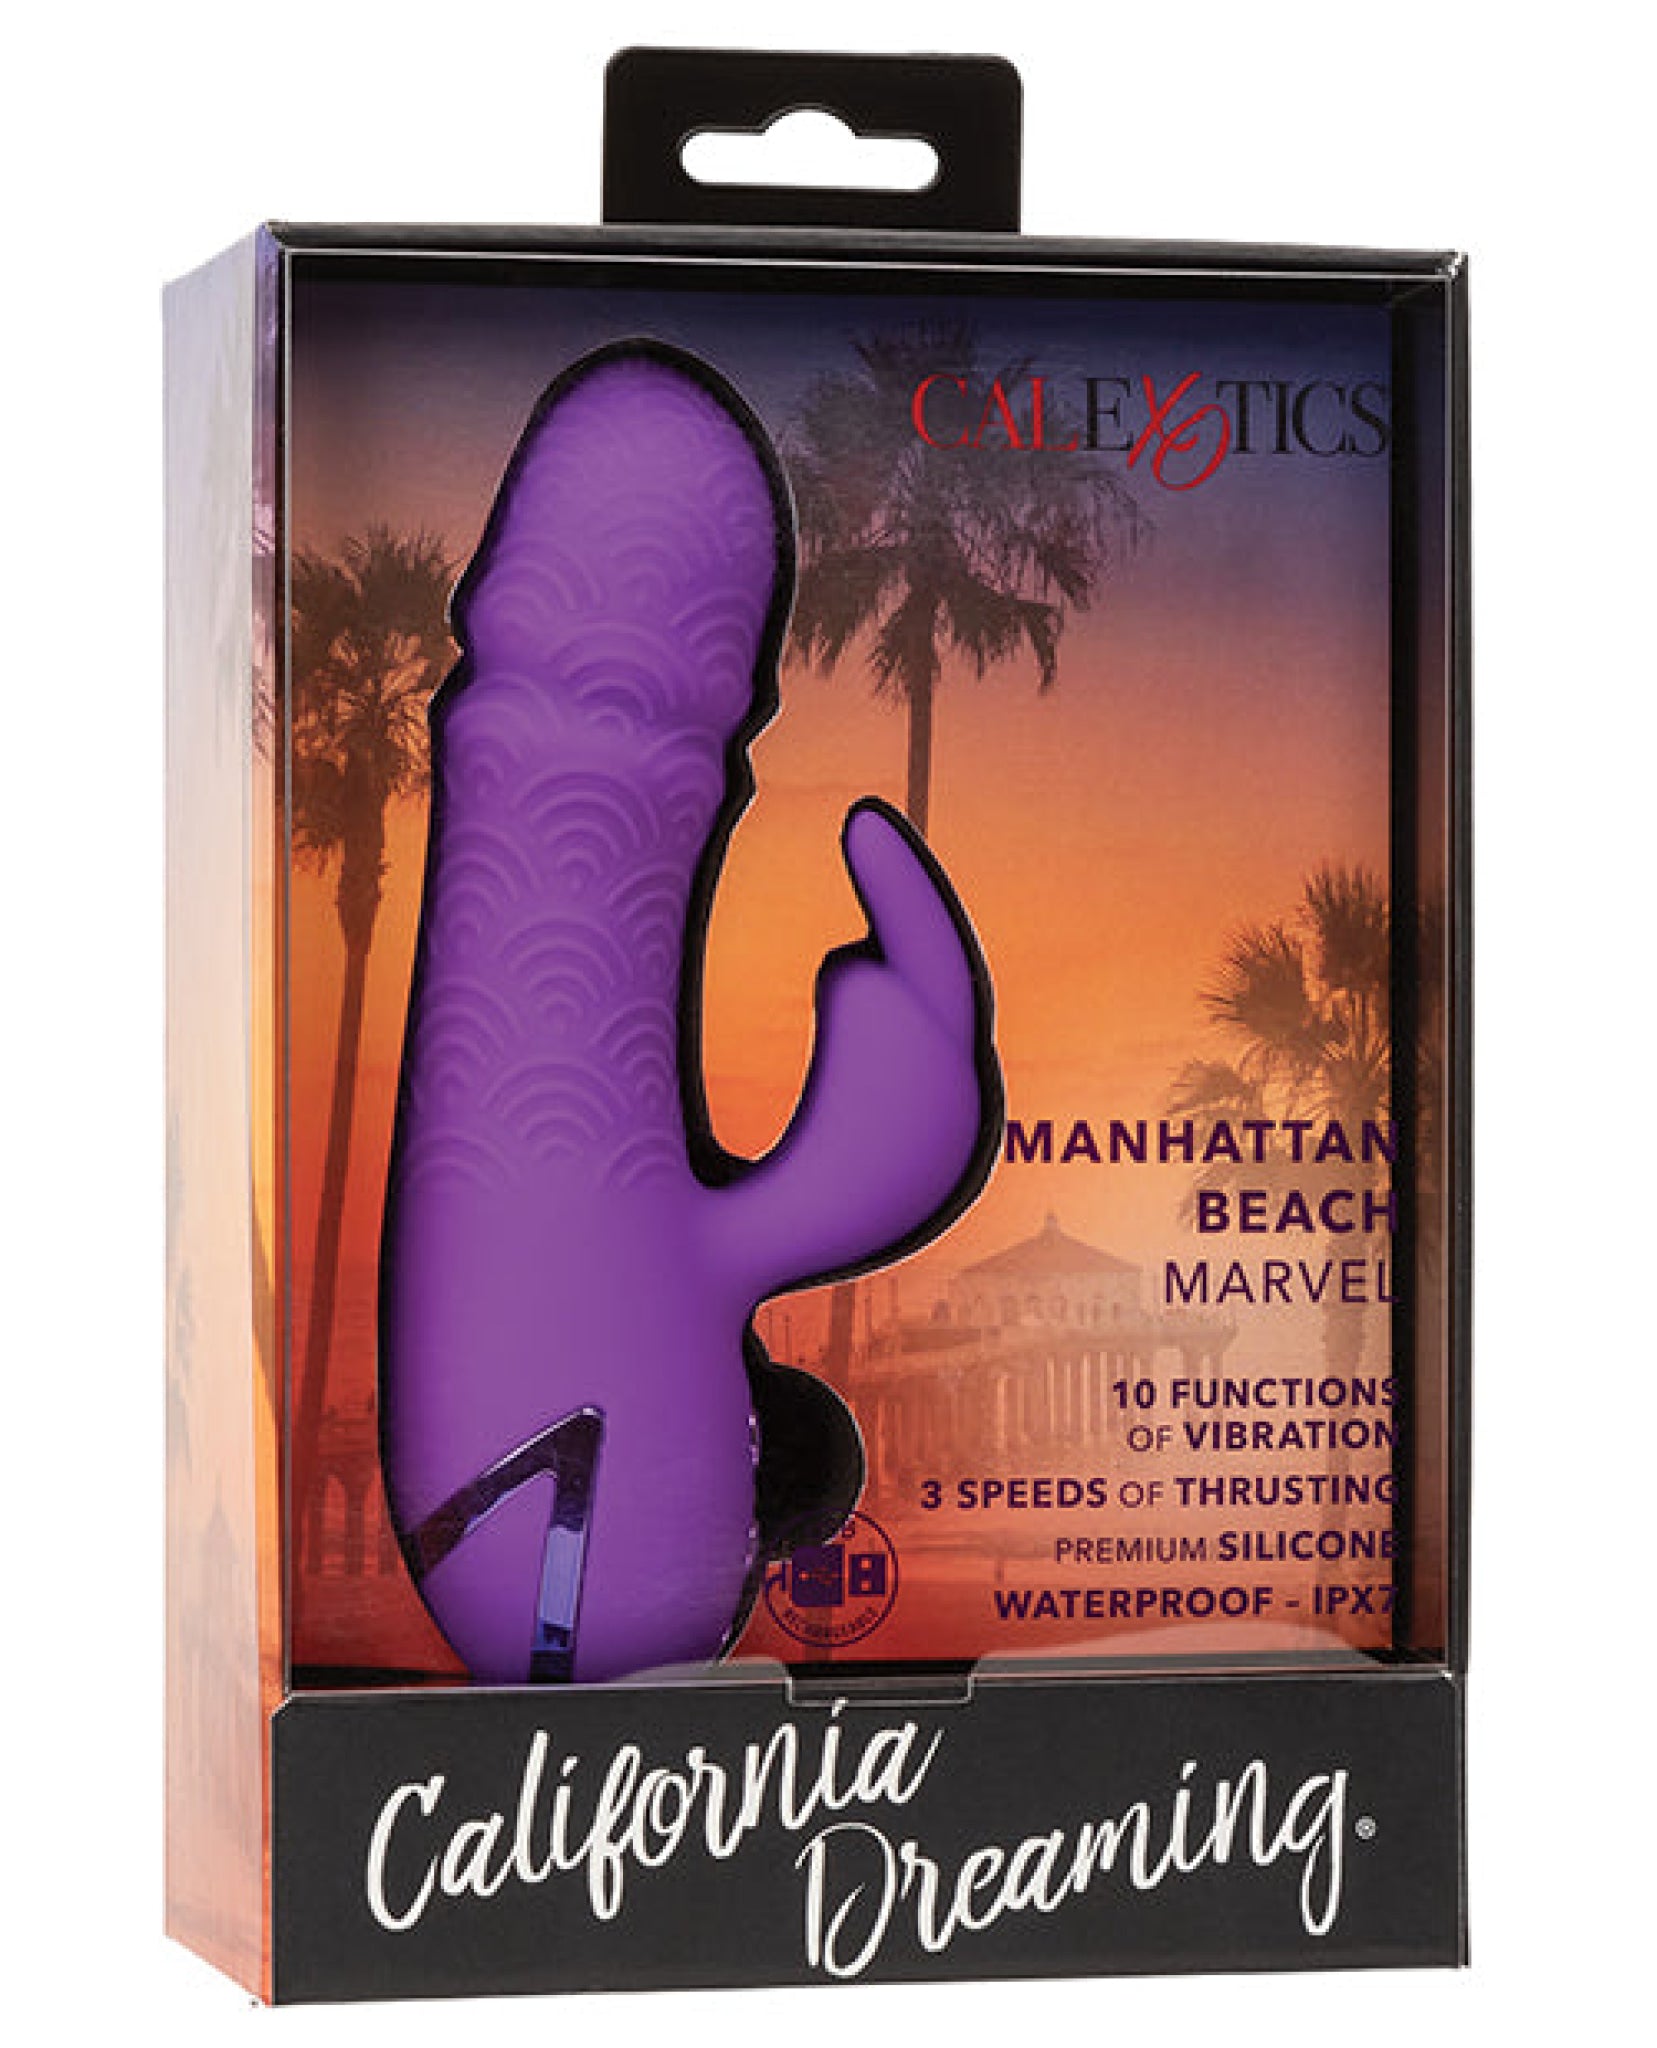 California Dreaming Manhattan Beach Marvel Dual Stimulation Vibe - Purple California Exotic Novelties